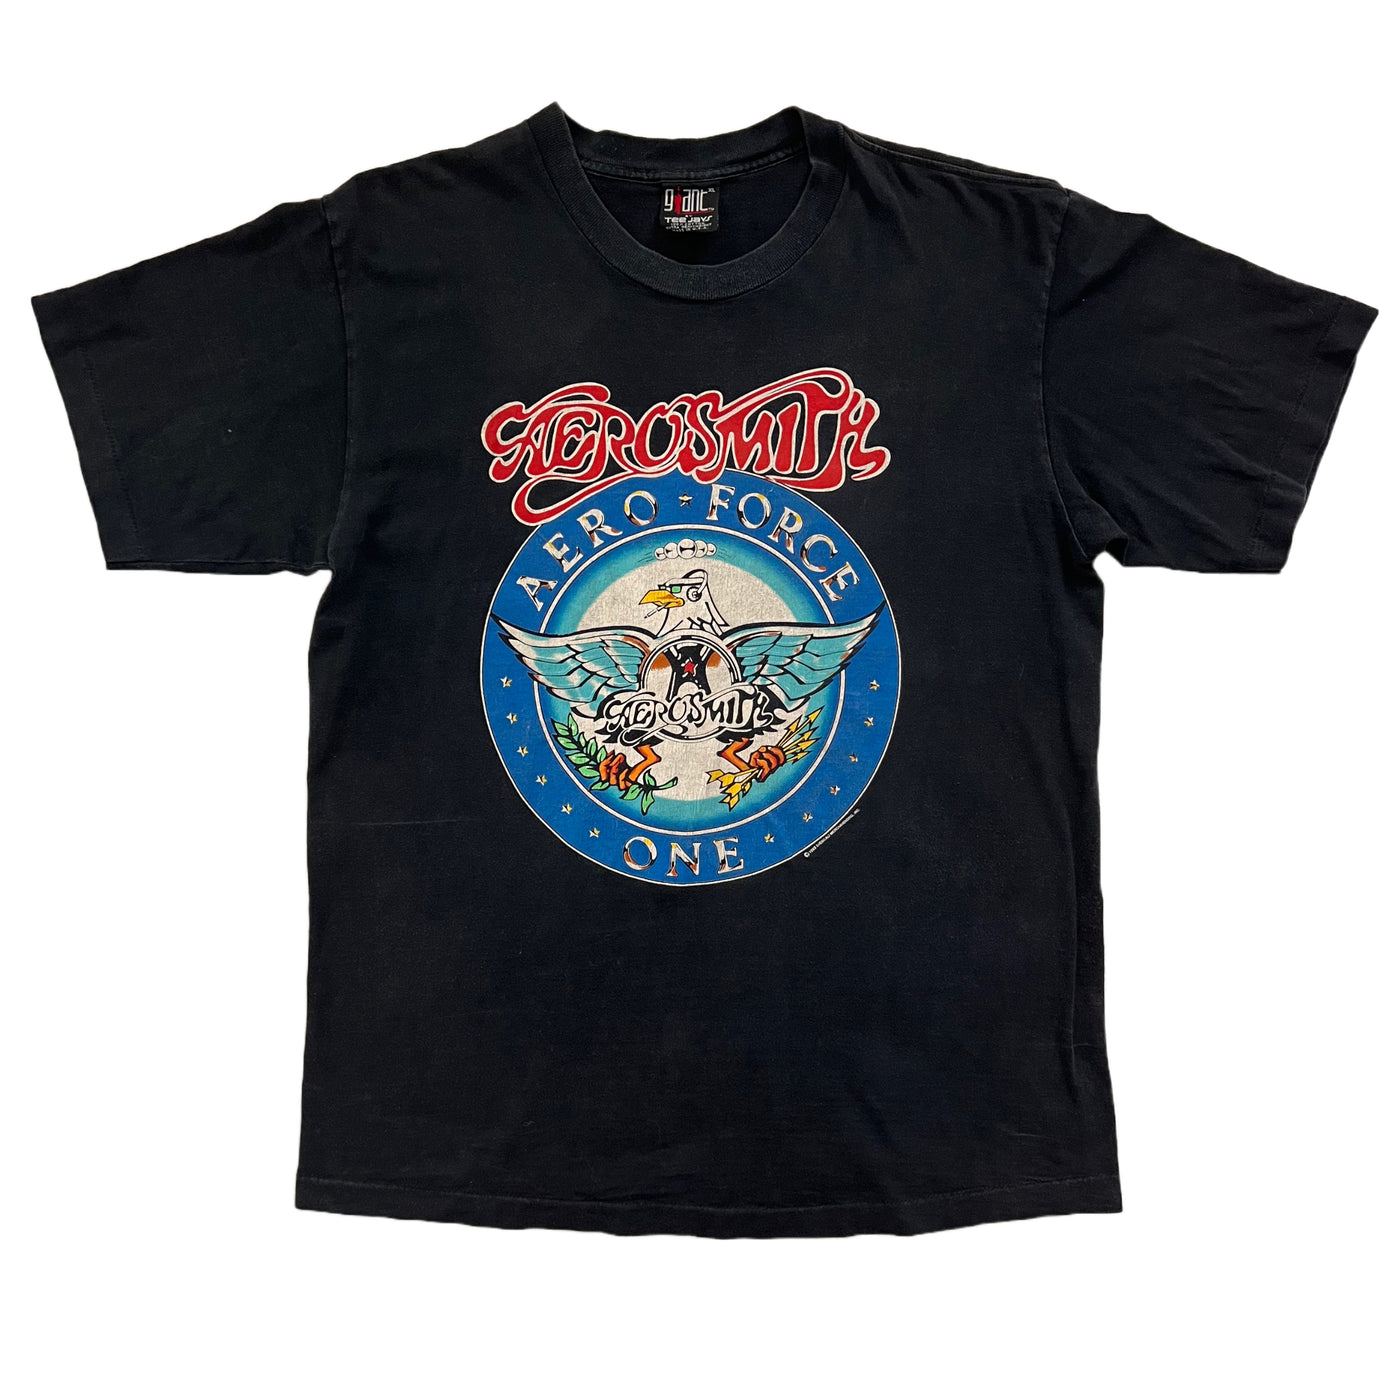 Vintage 1993 Aerosmith Tour T-shirt. XL